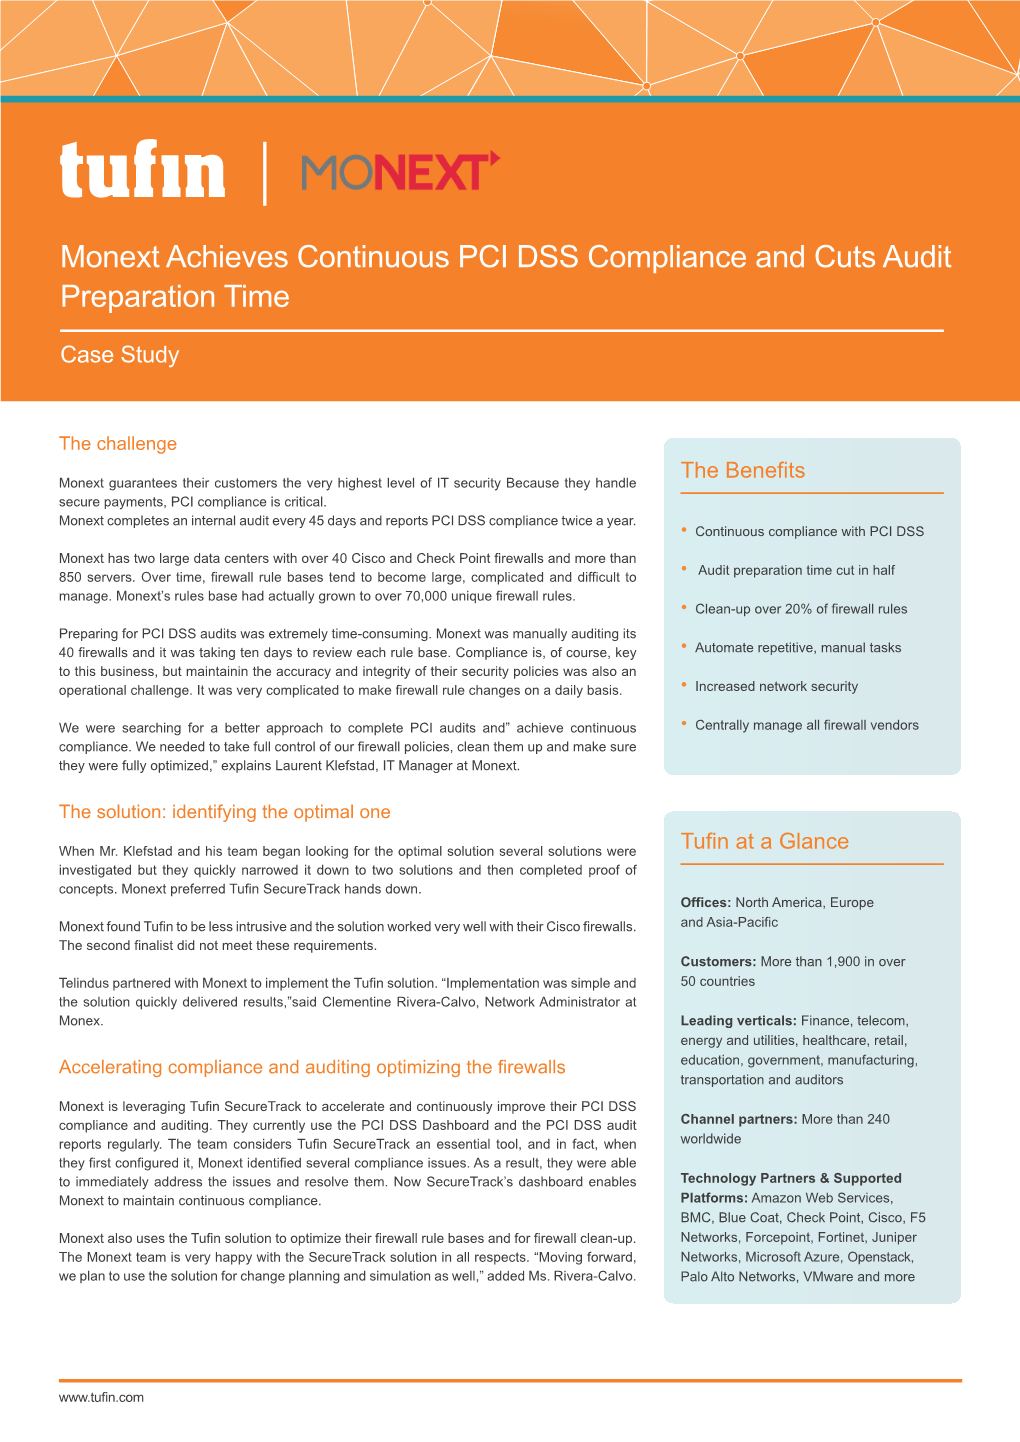 MONEXT Acheives Continous PCI Compliance with Tufin